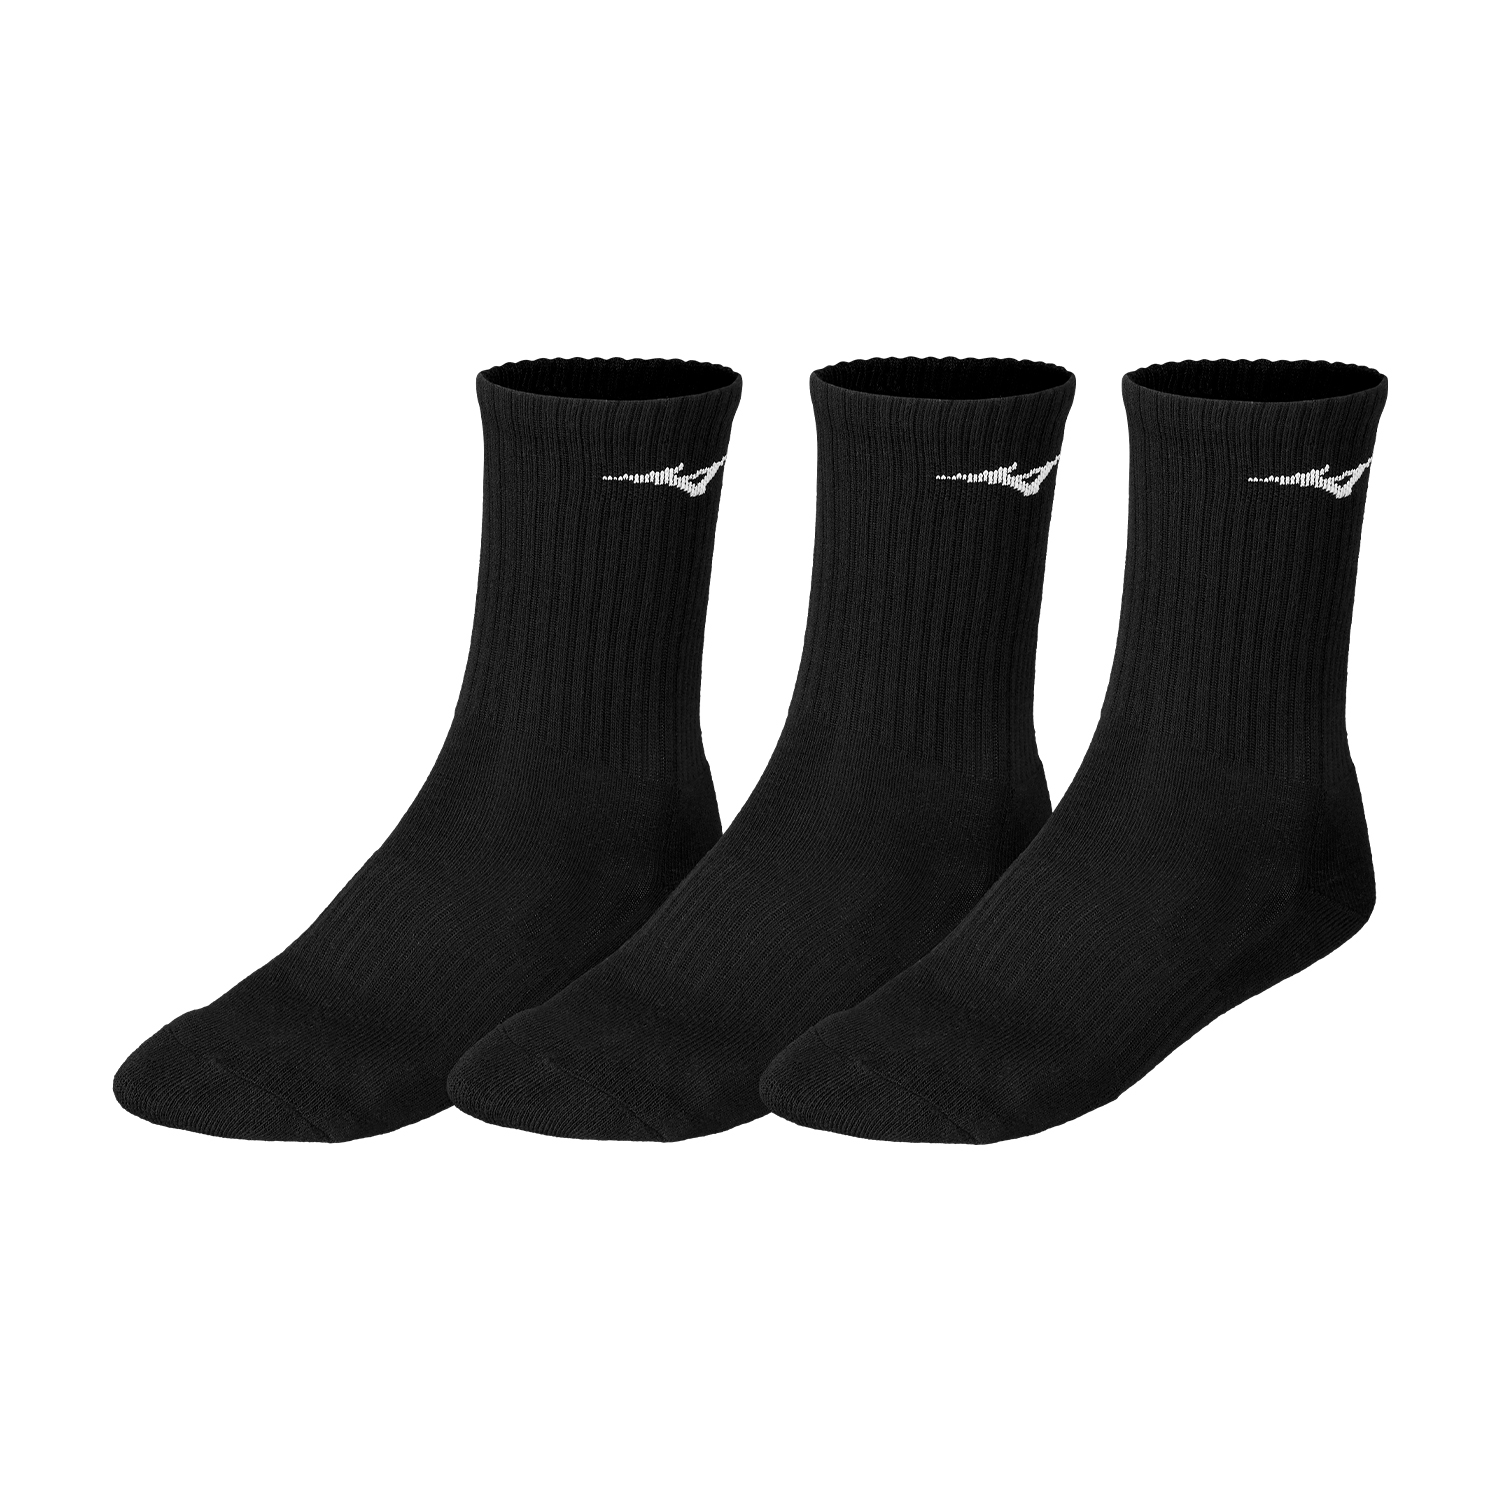 Mizuno Drylite Socks x 3 - Black